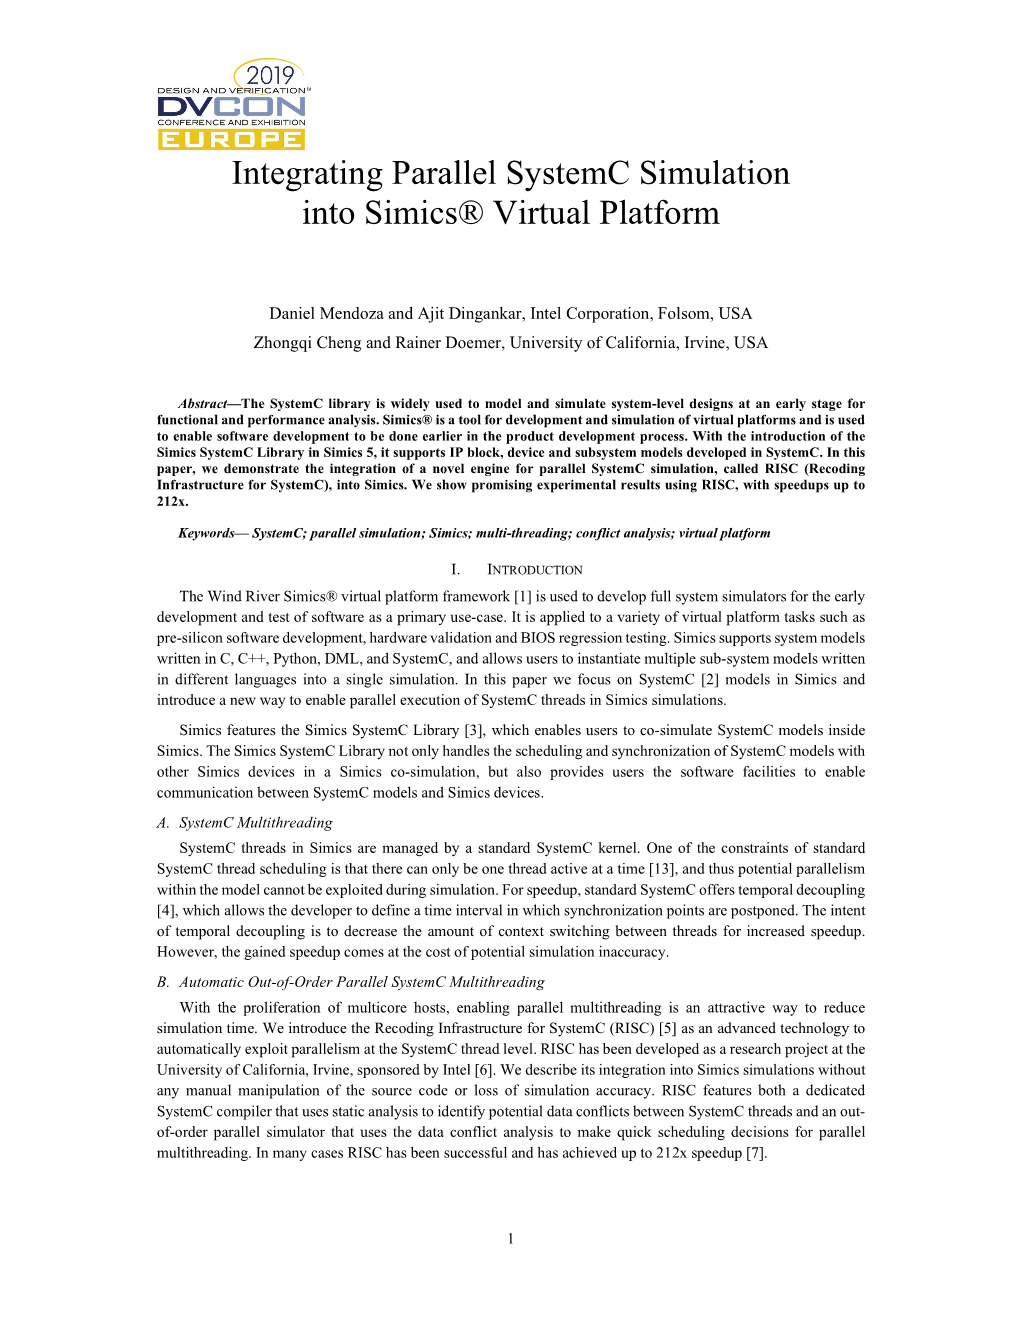 Integrating Parallel Systemc Simulation Into Simics(R) Virtual